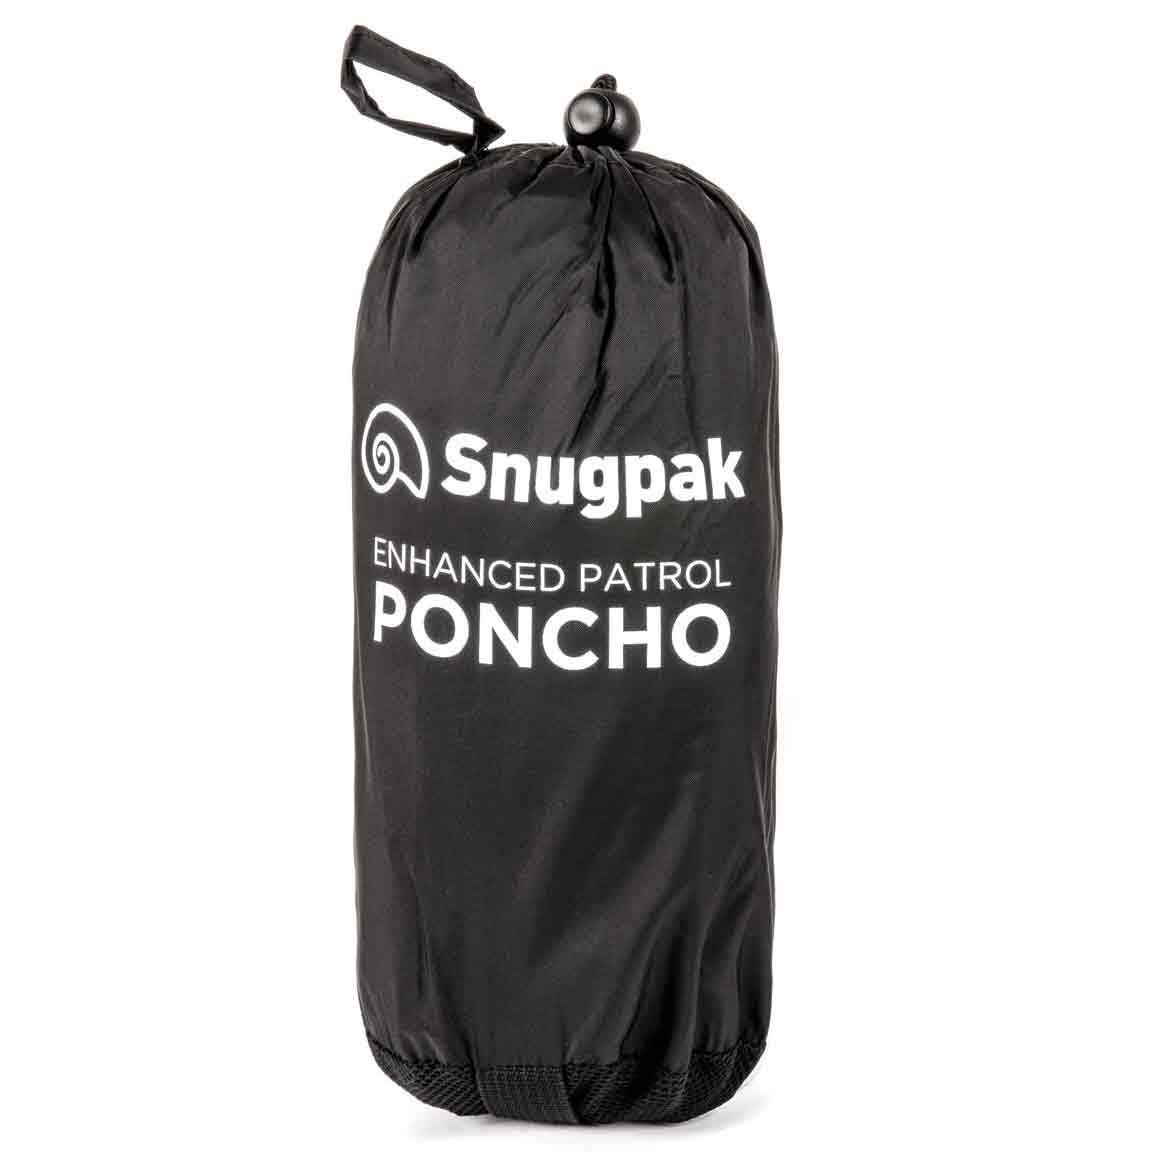 Snugpak Enhanced Patrol Black Poncho - John Bull Clothing